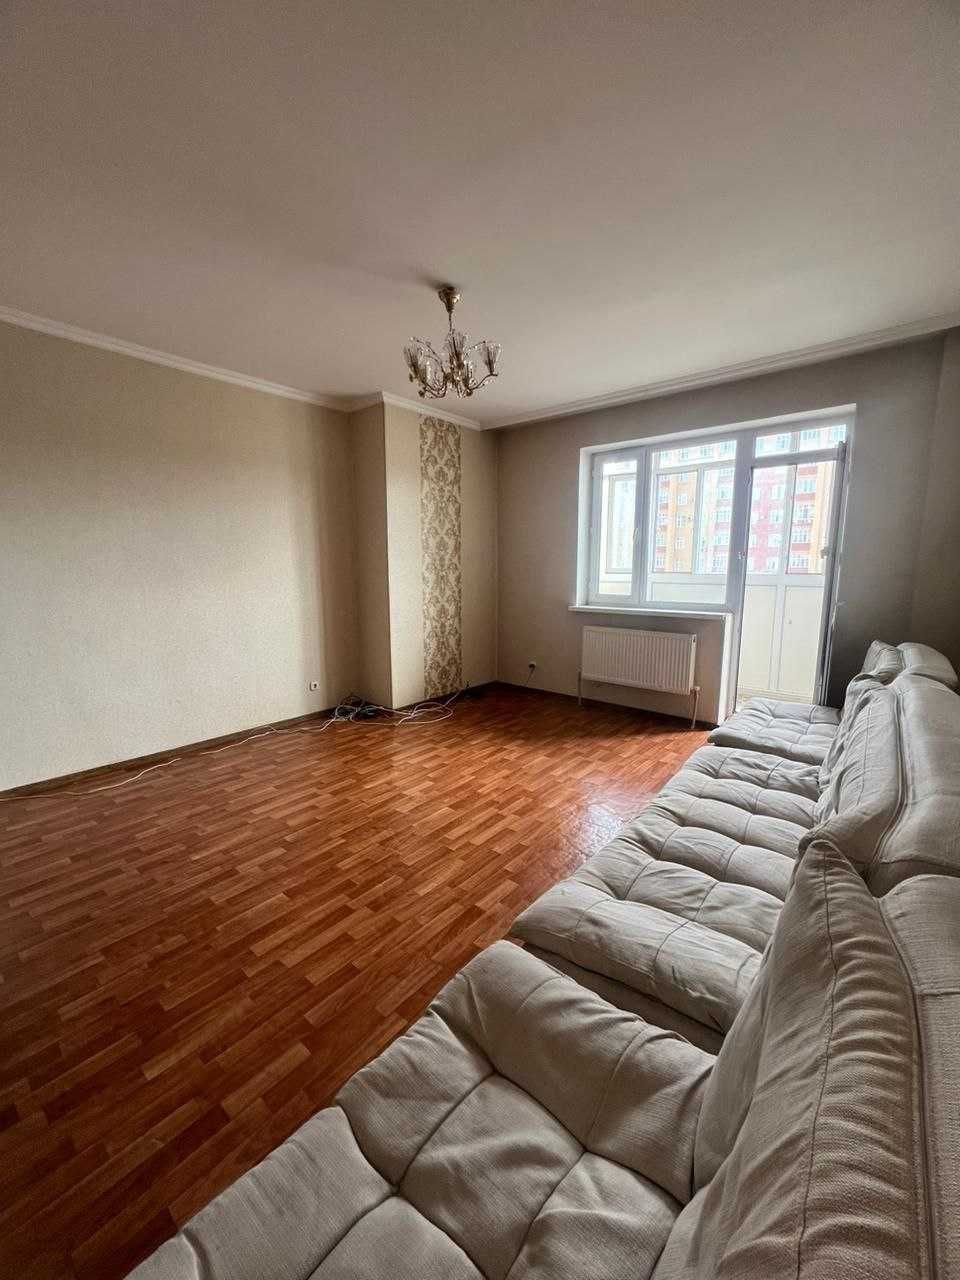 Продам 2х комнатную квартиру по улице Шахтеров